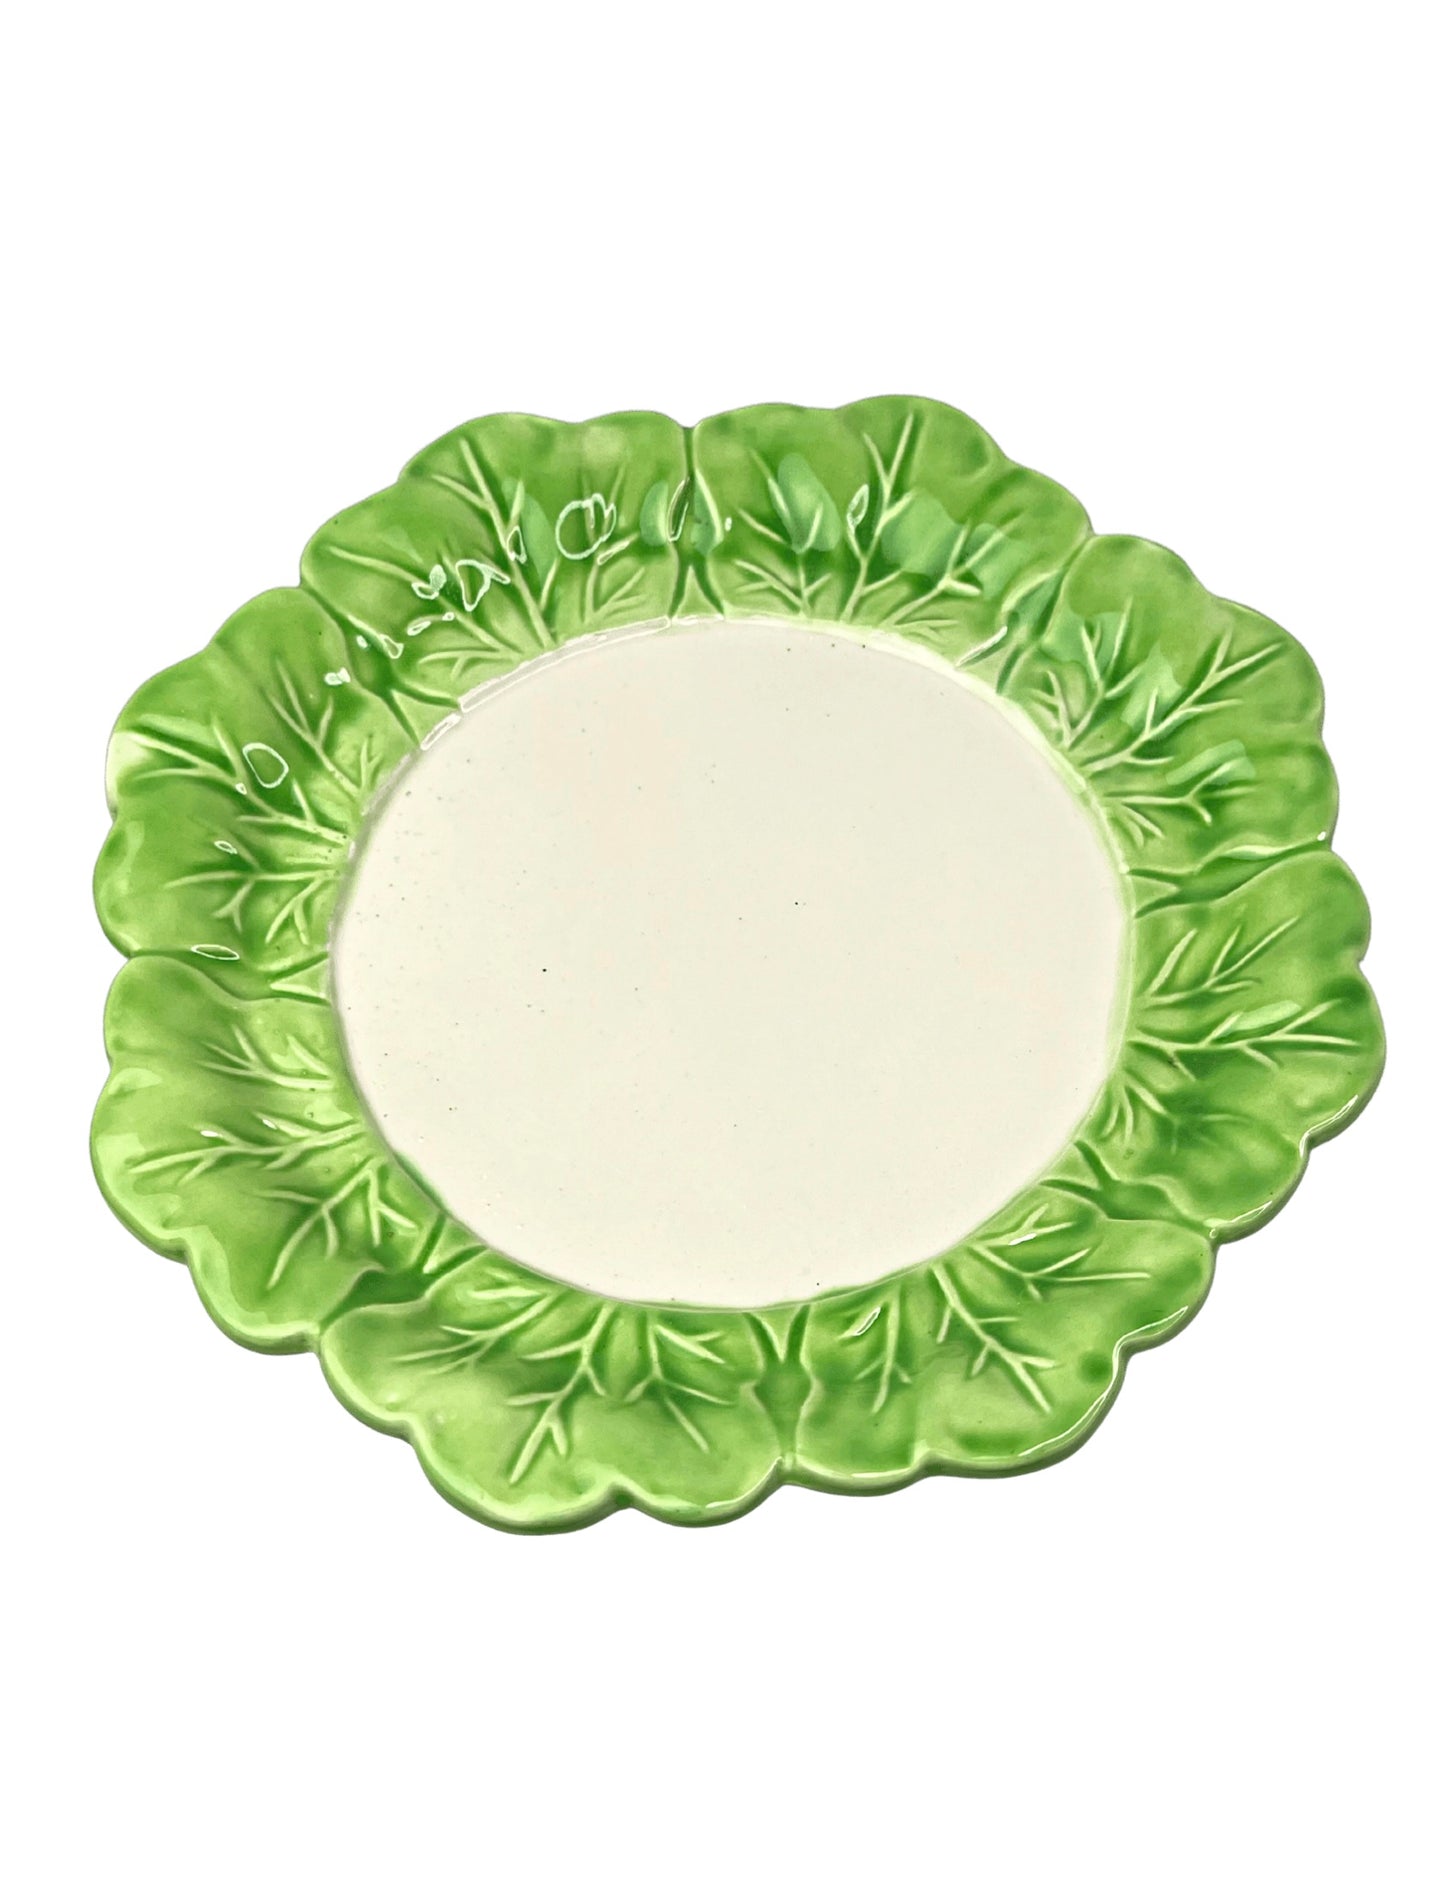 80’s Cabbage Lettuce Leaf Serving Dish 8” x 8”